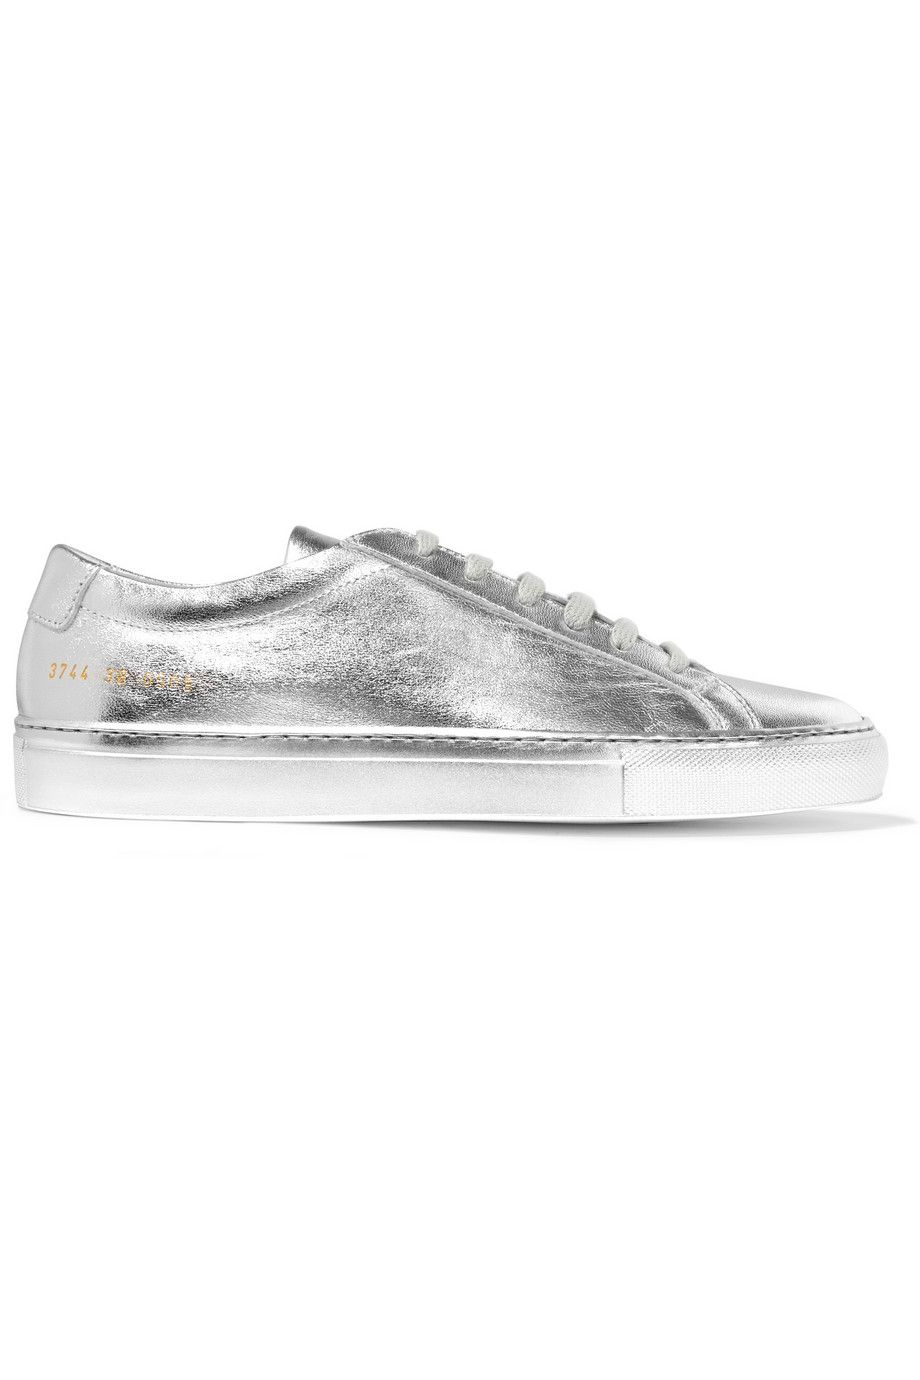 White, Grey, Monochrome, Beige, Black-and-white, Silver, Walking shoe, Monochrome photography, Outdoor shoe, Skate shoe, 